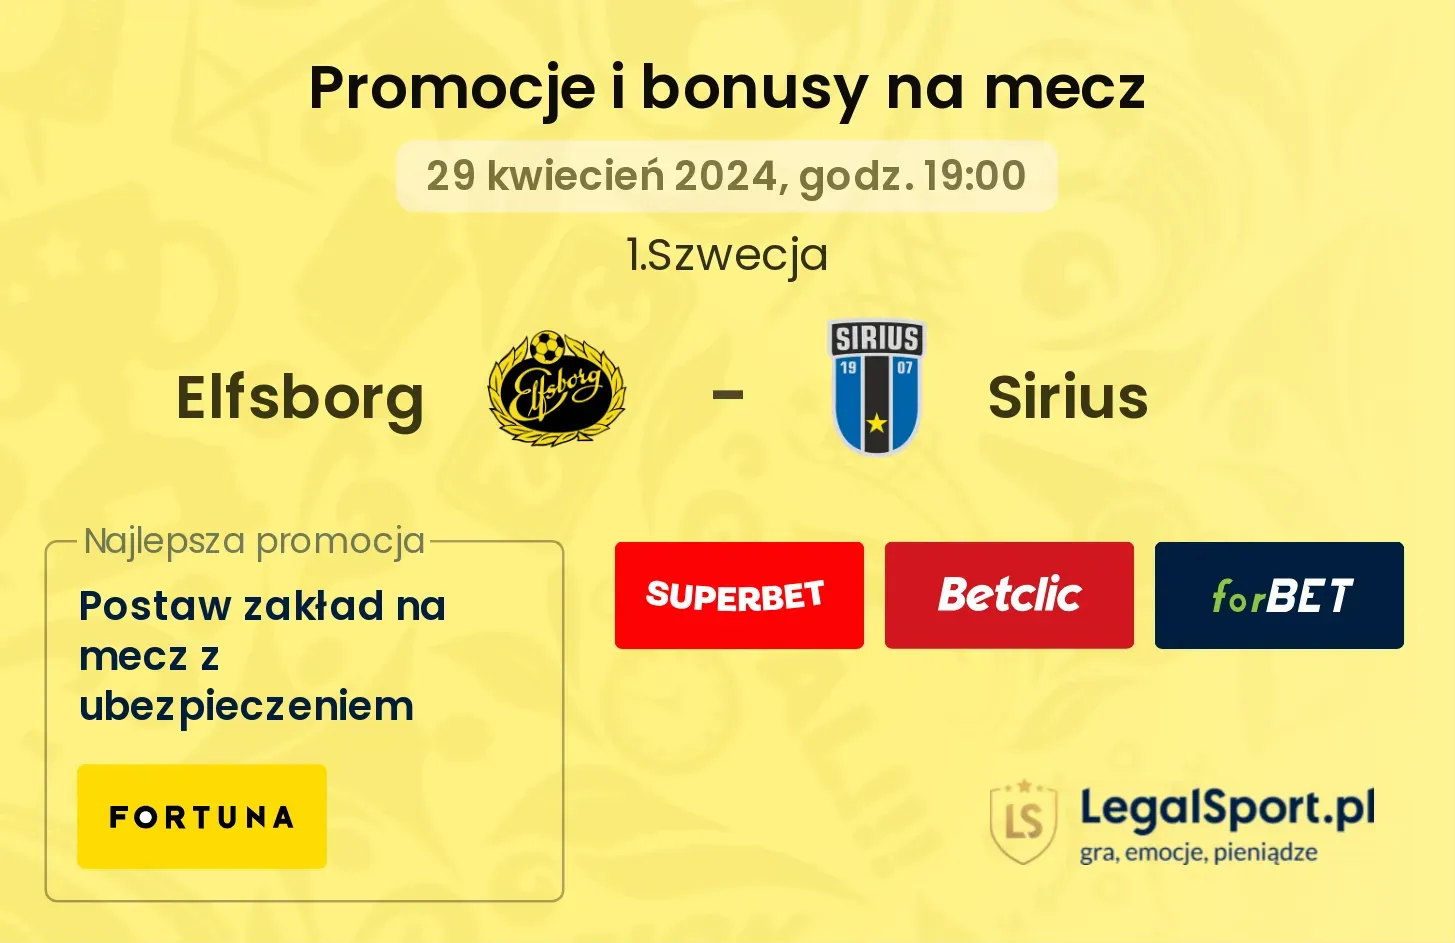 Elfsborg - Sirius promocje bonusy na mecz